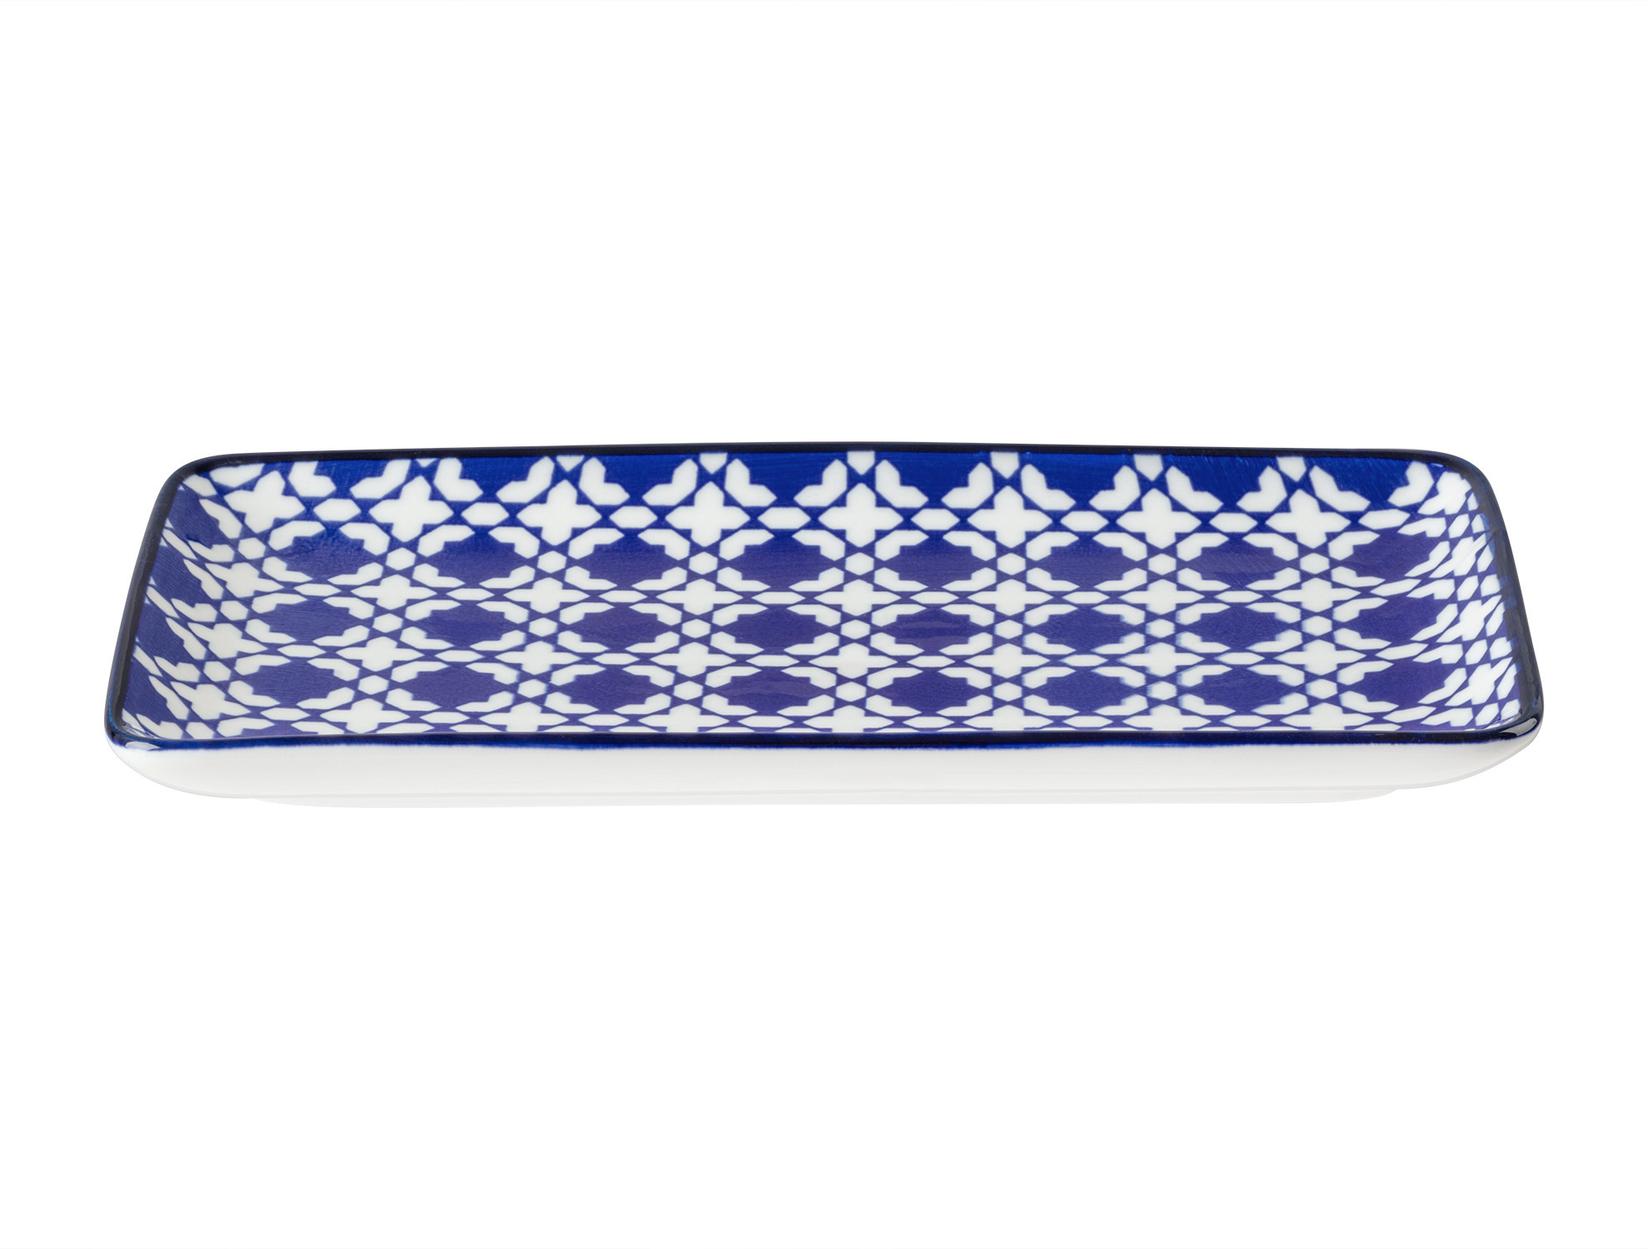 MADAME COCO Rêve Bleu Tanjir za serviranje, 22.5x12.2x2.2cm, Plavo-beli